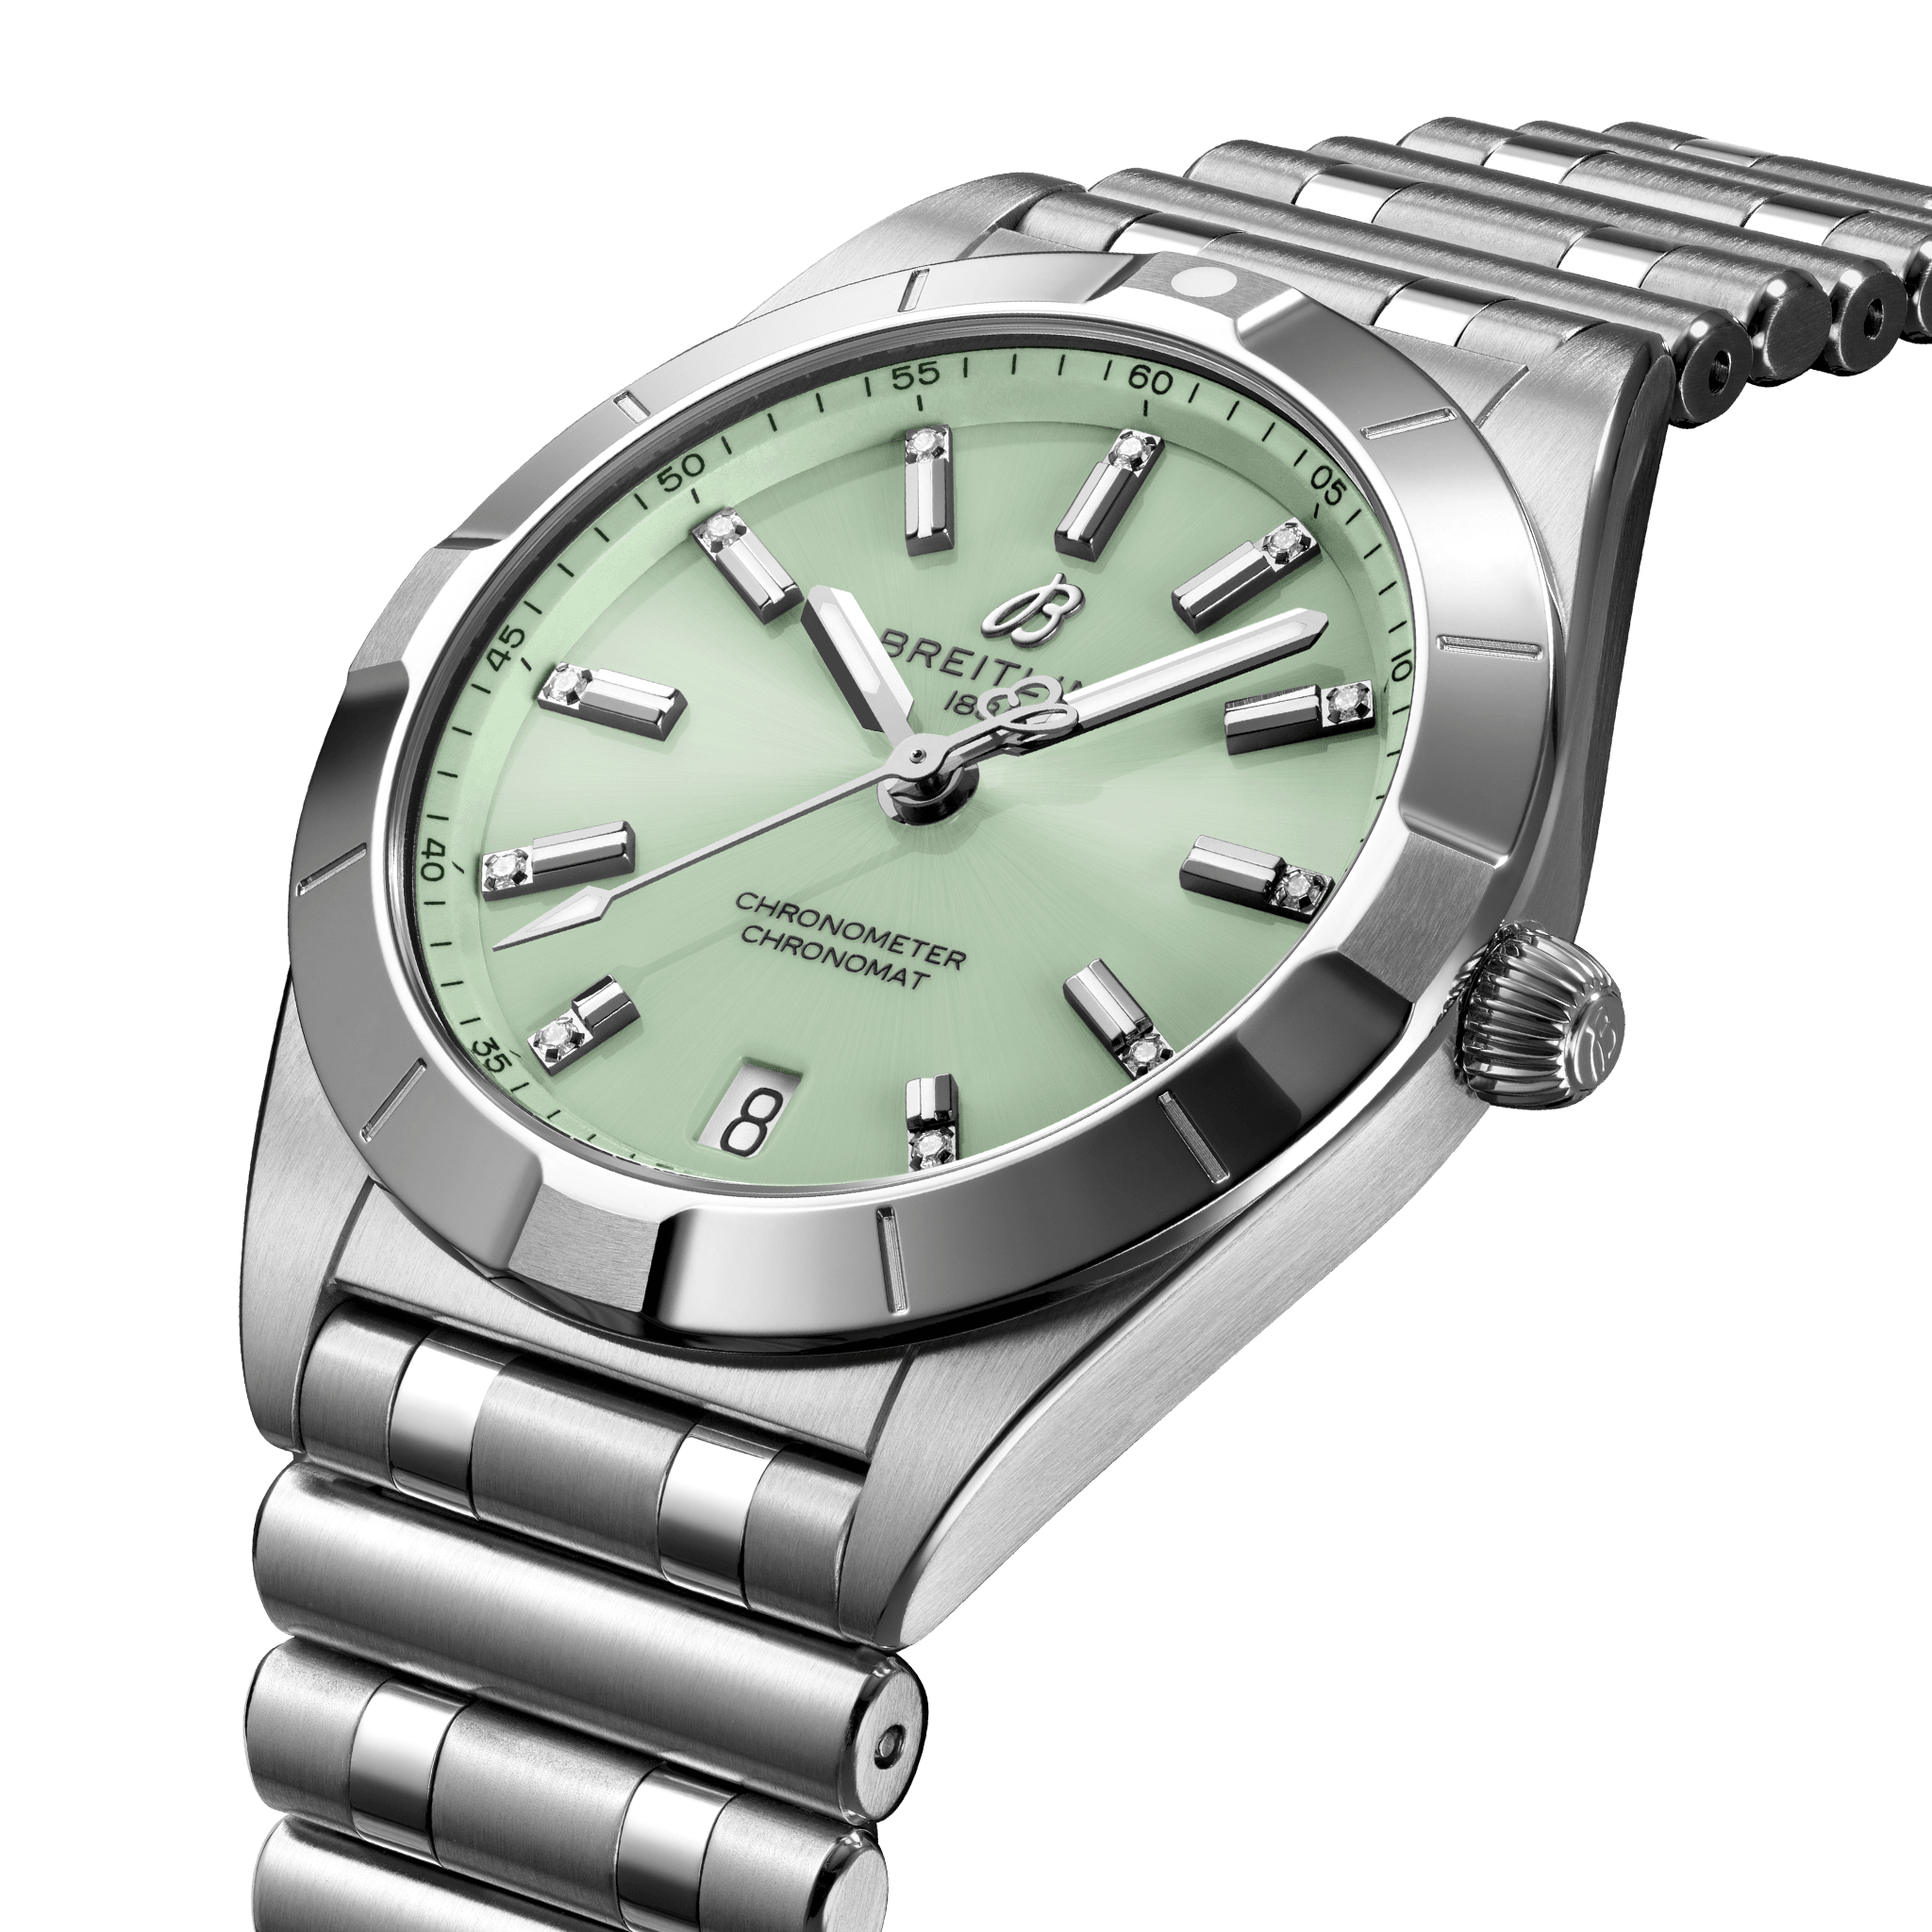 Breitling Chronomat 32 watch